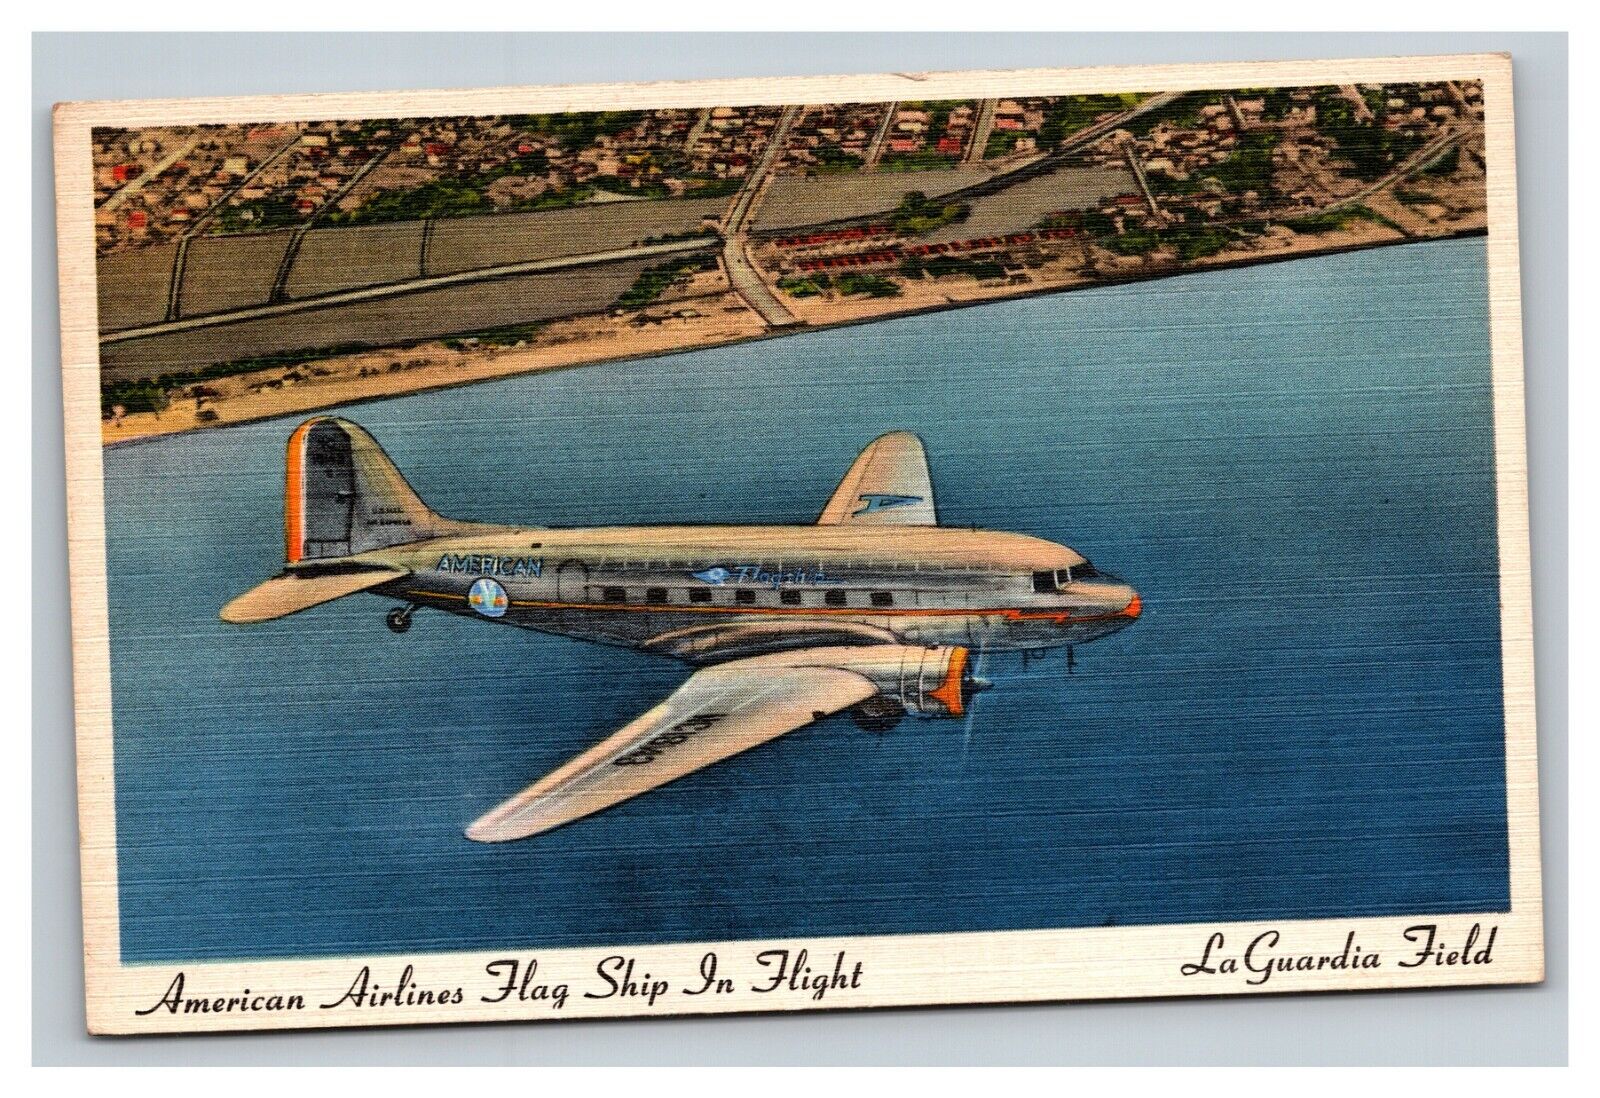 Vintage 1940's Advertising Postcard American Airlines Laguardia Field New York